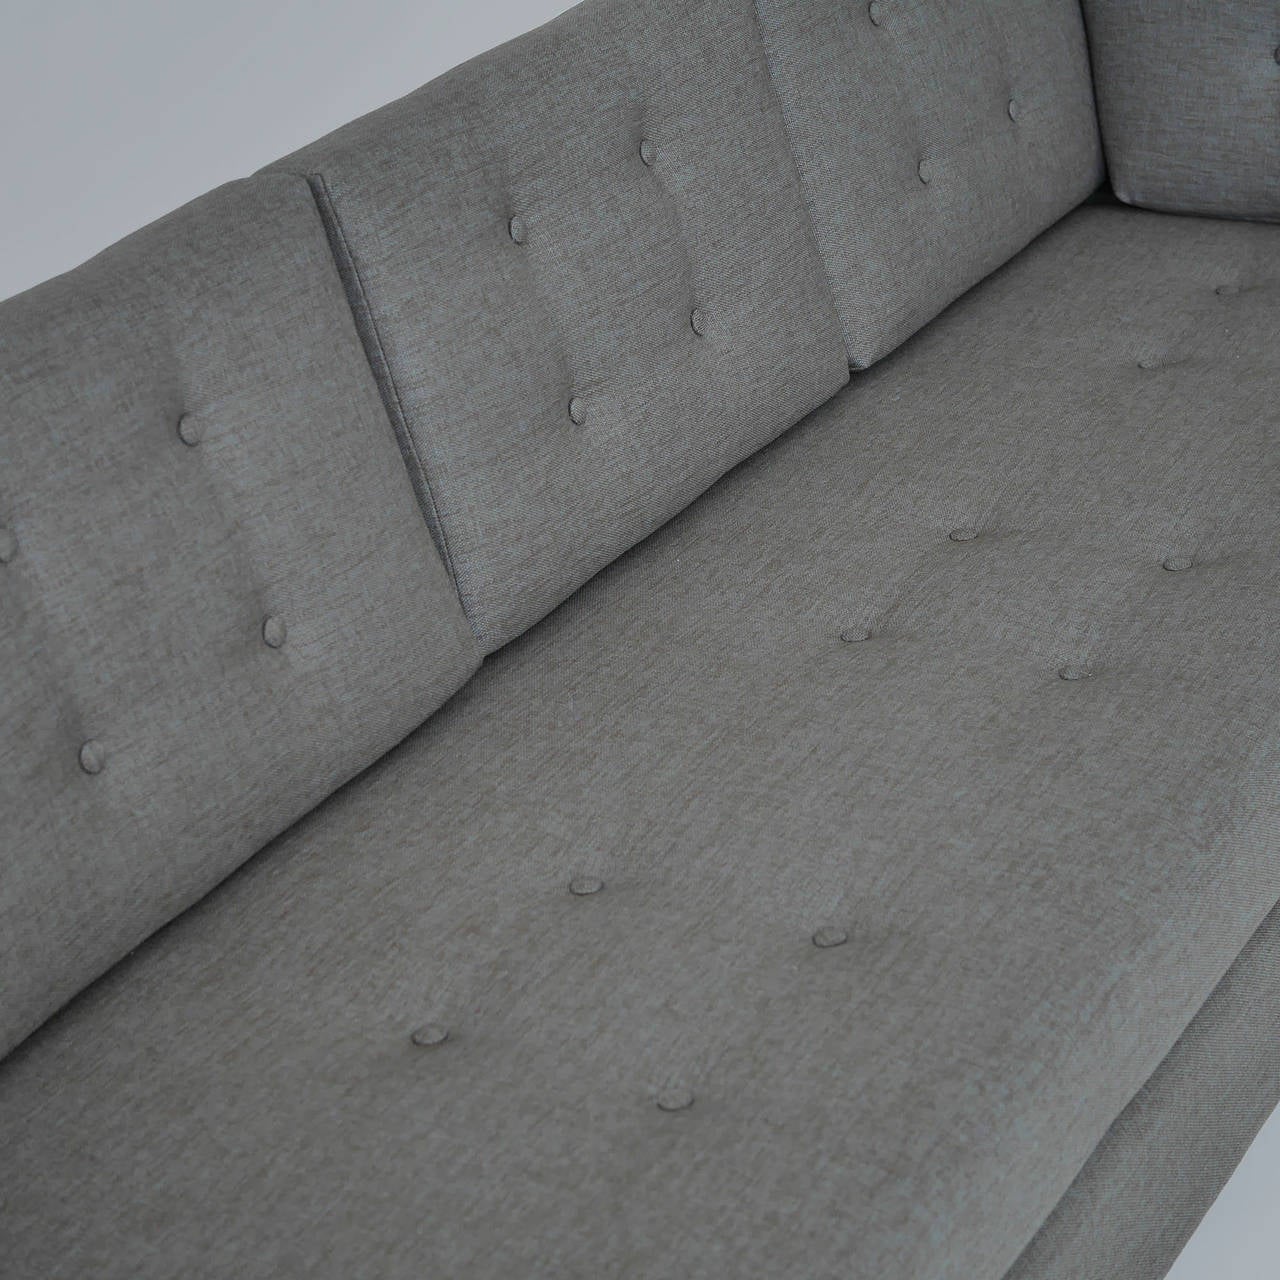 Fabric Adrian Pearsall Sofa For Craft Associates